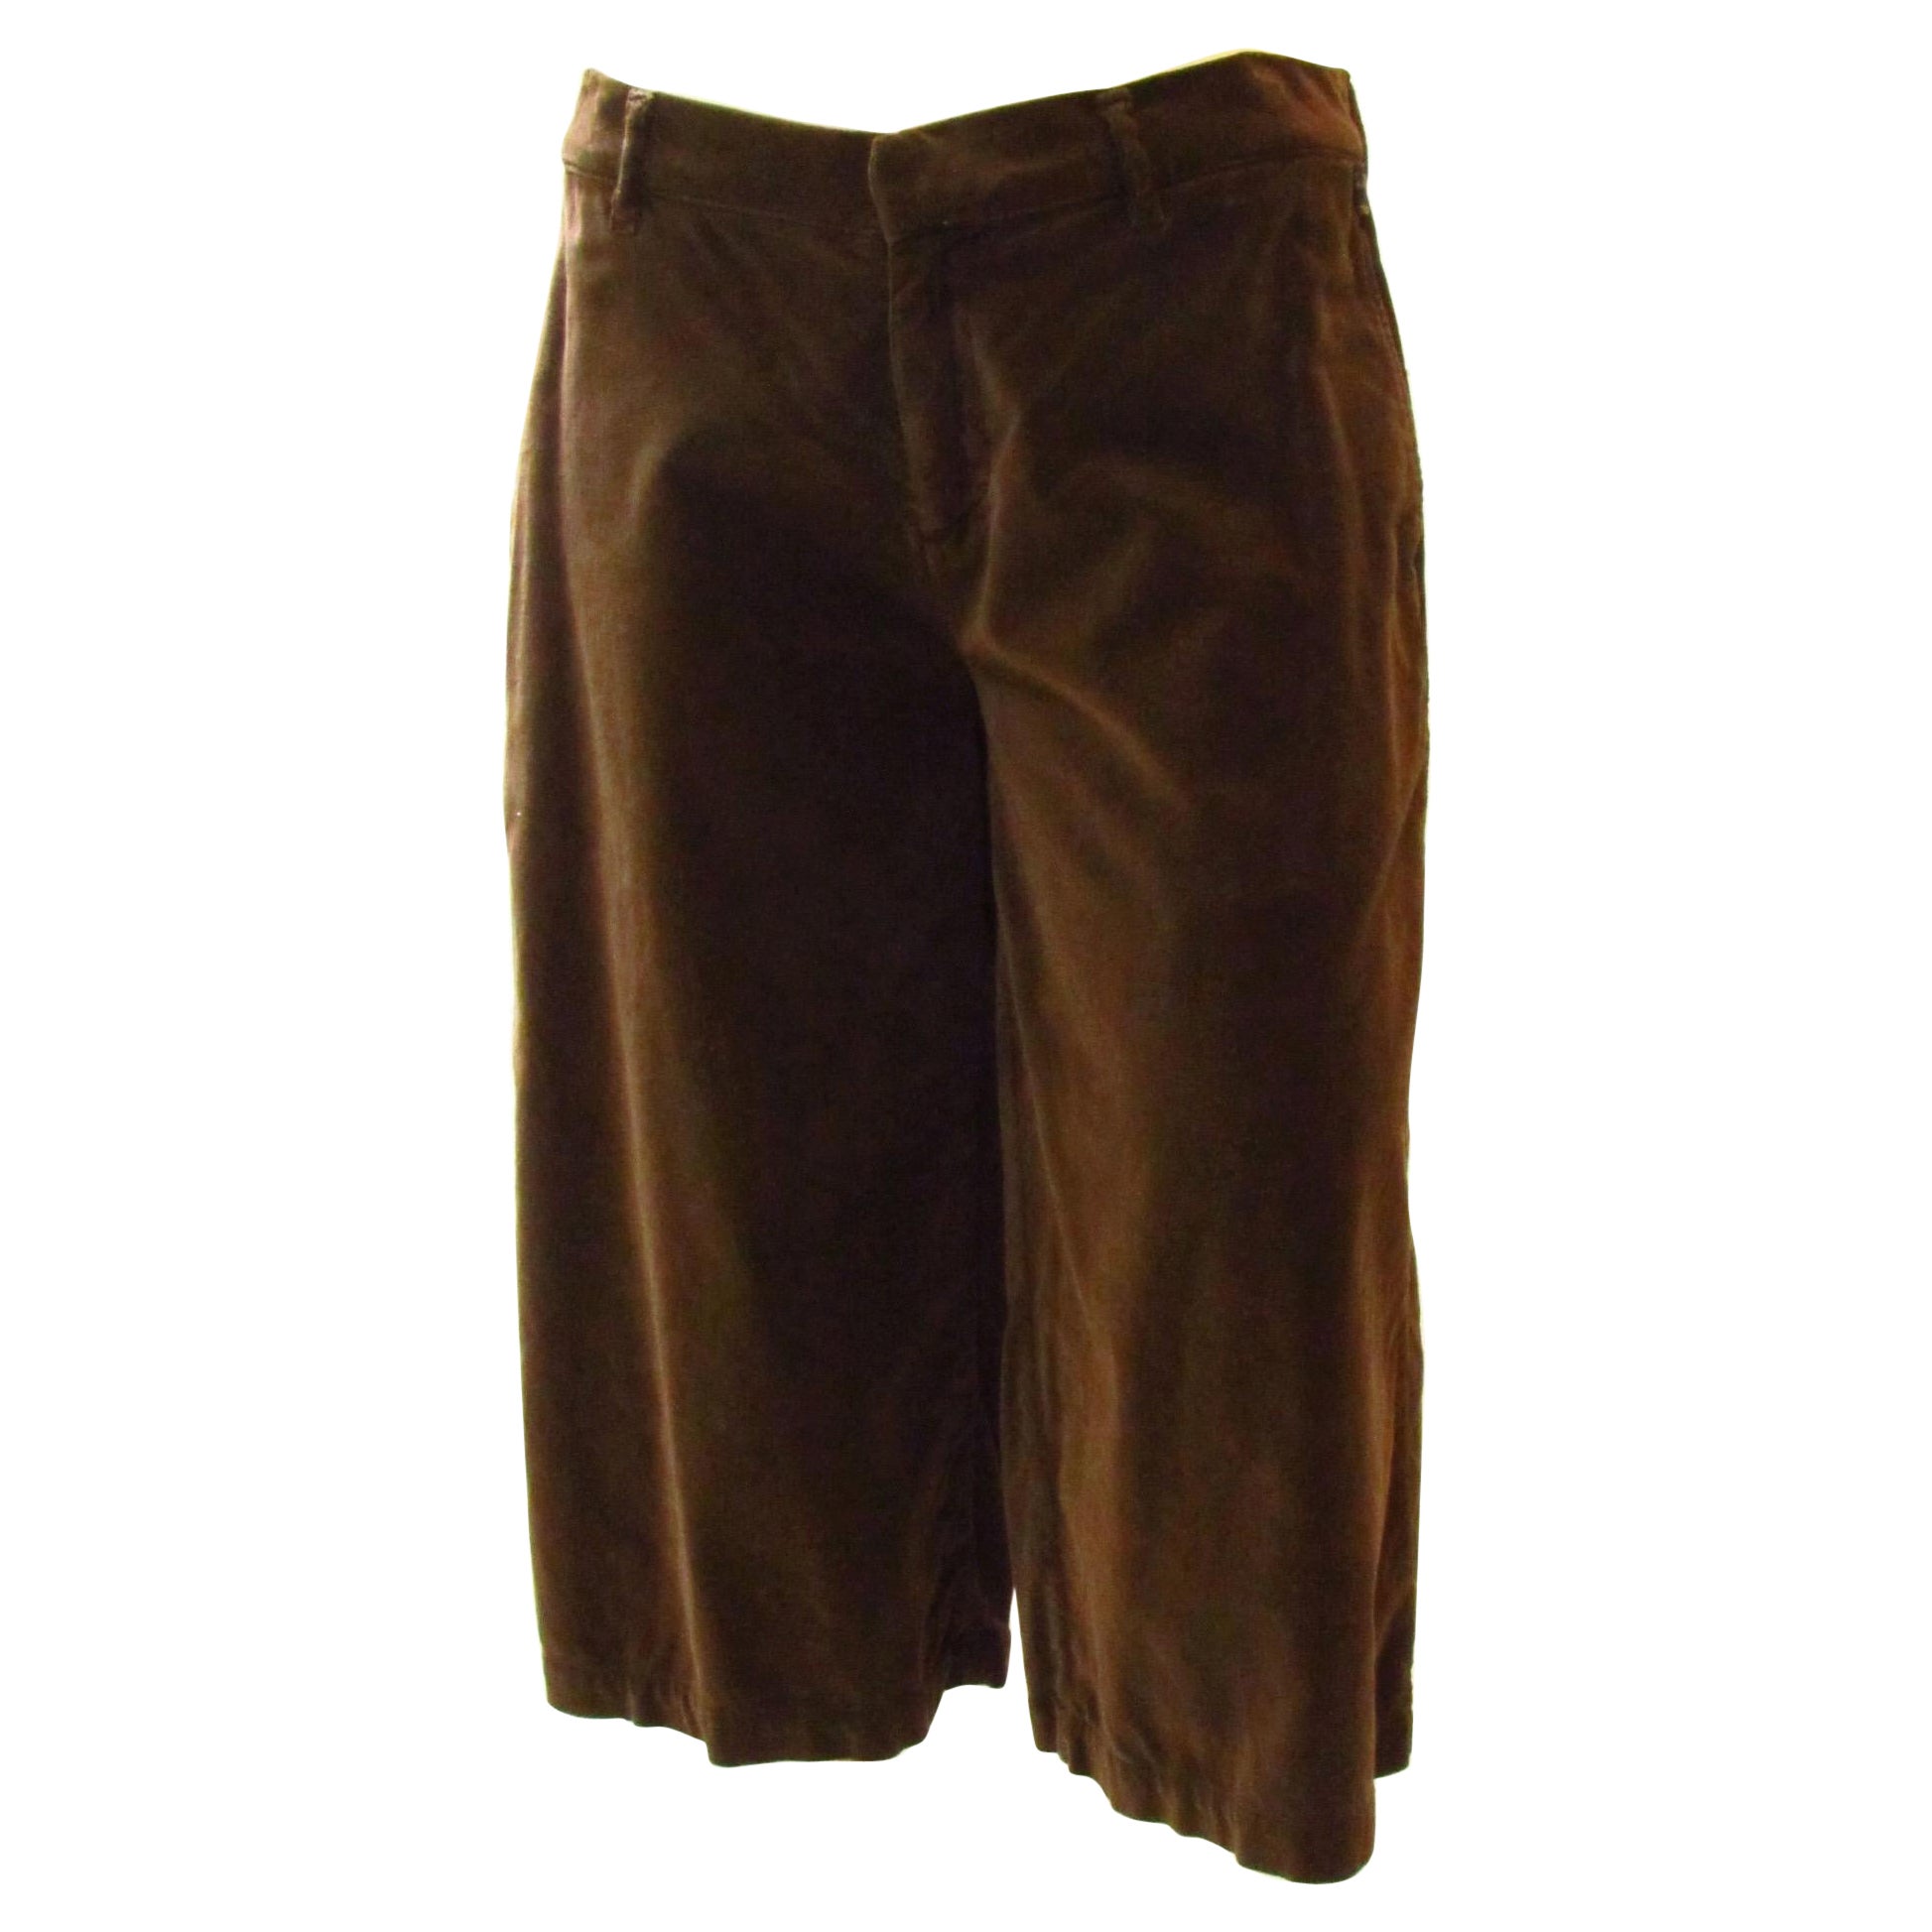 Jean Paul Gaultier short Brown Velvet pants